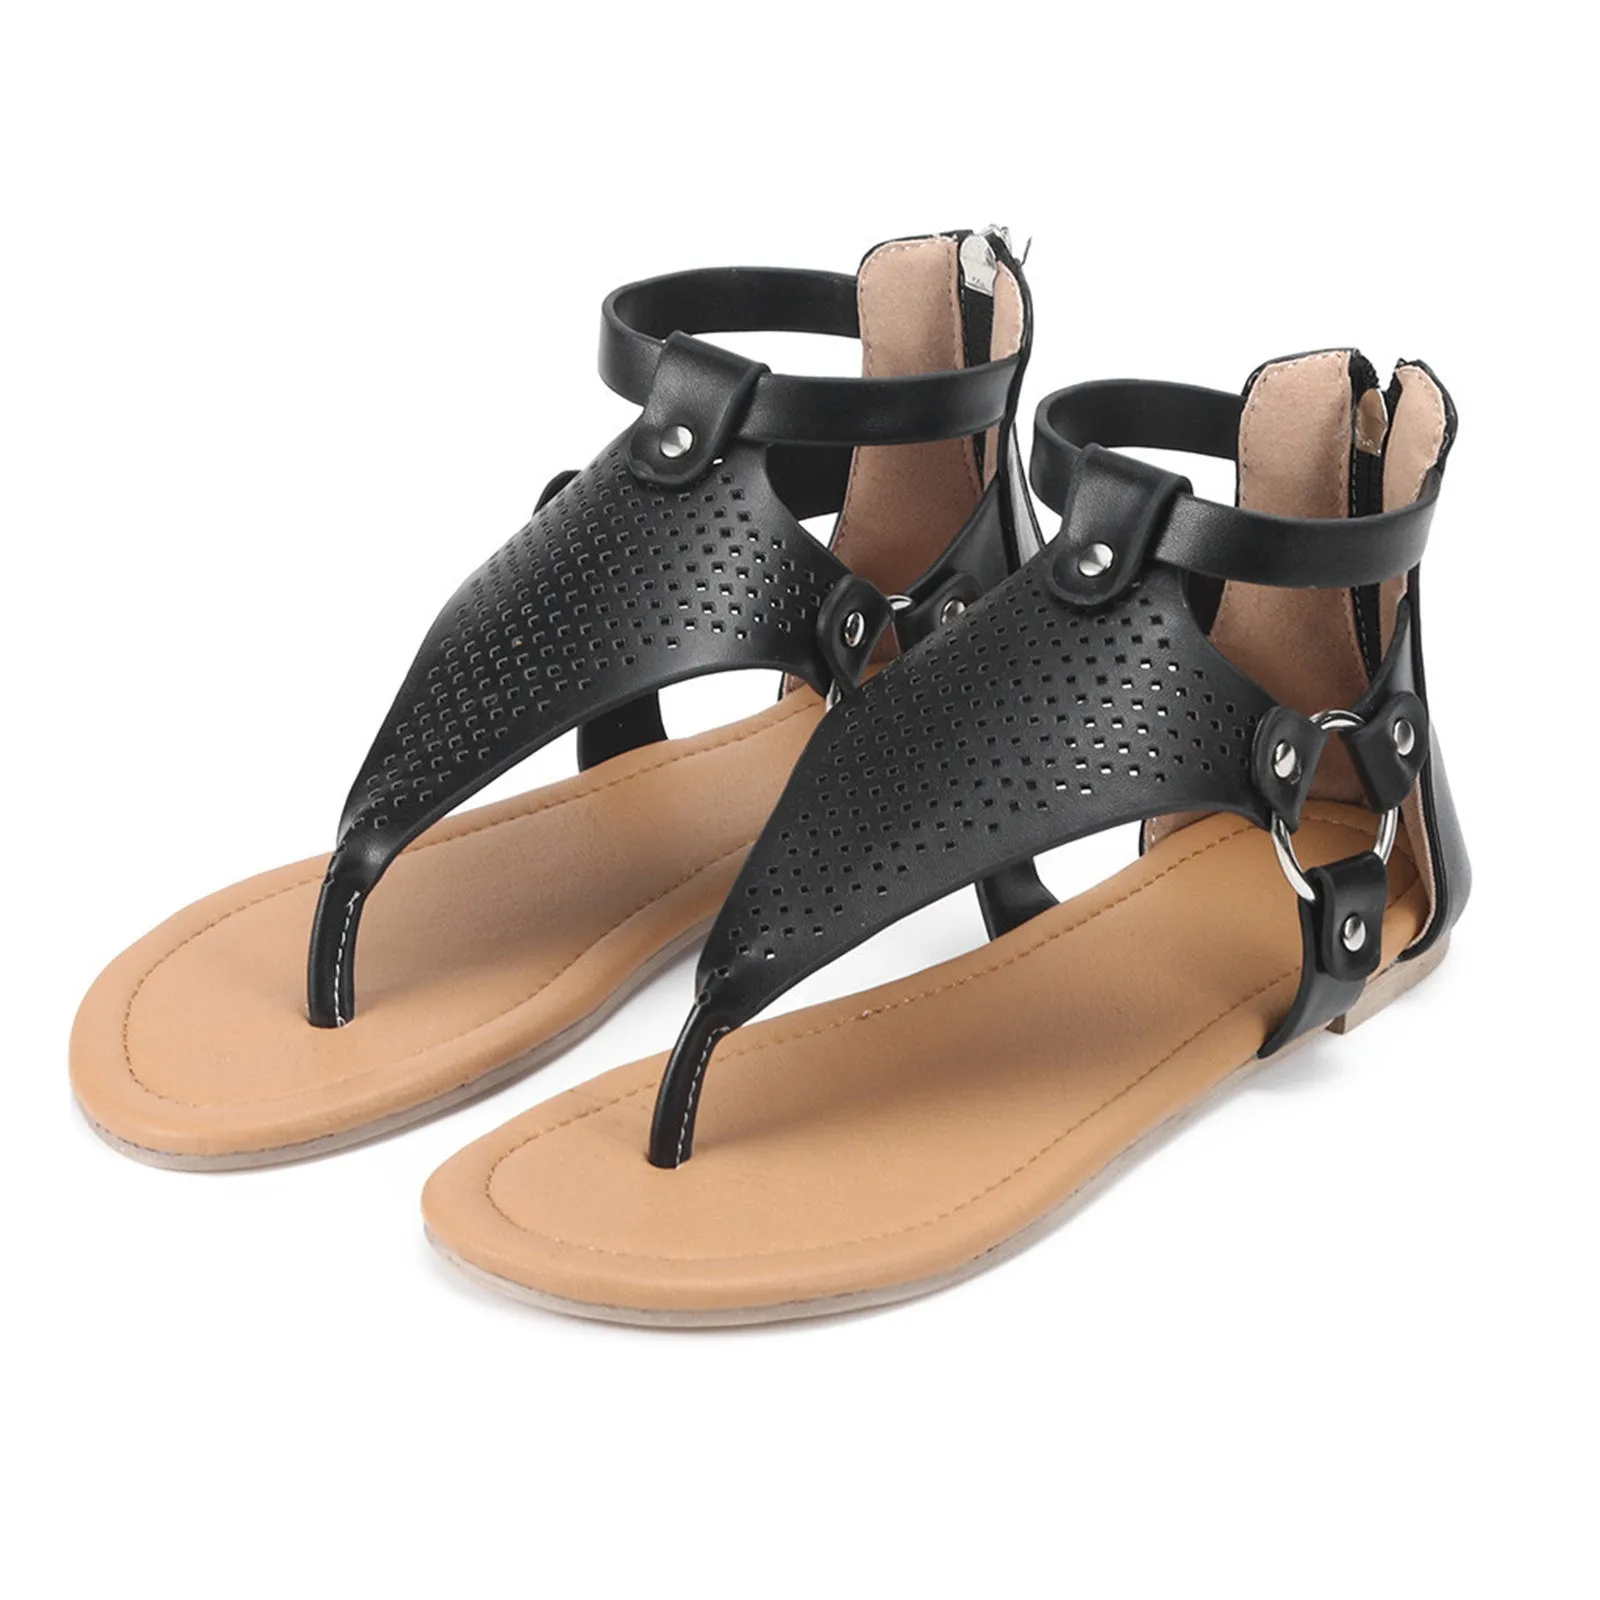 

Cooeverly Women 2021 Flat Sandals Leopard Snake Print Summer Shoes Beach Leather Sandals Retro Gladiator Flip Flops Slippers